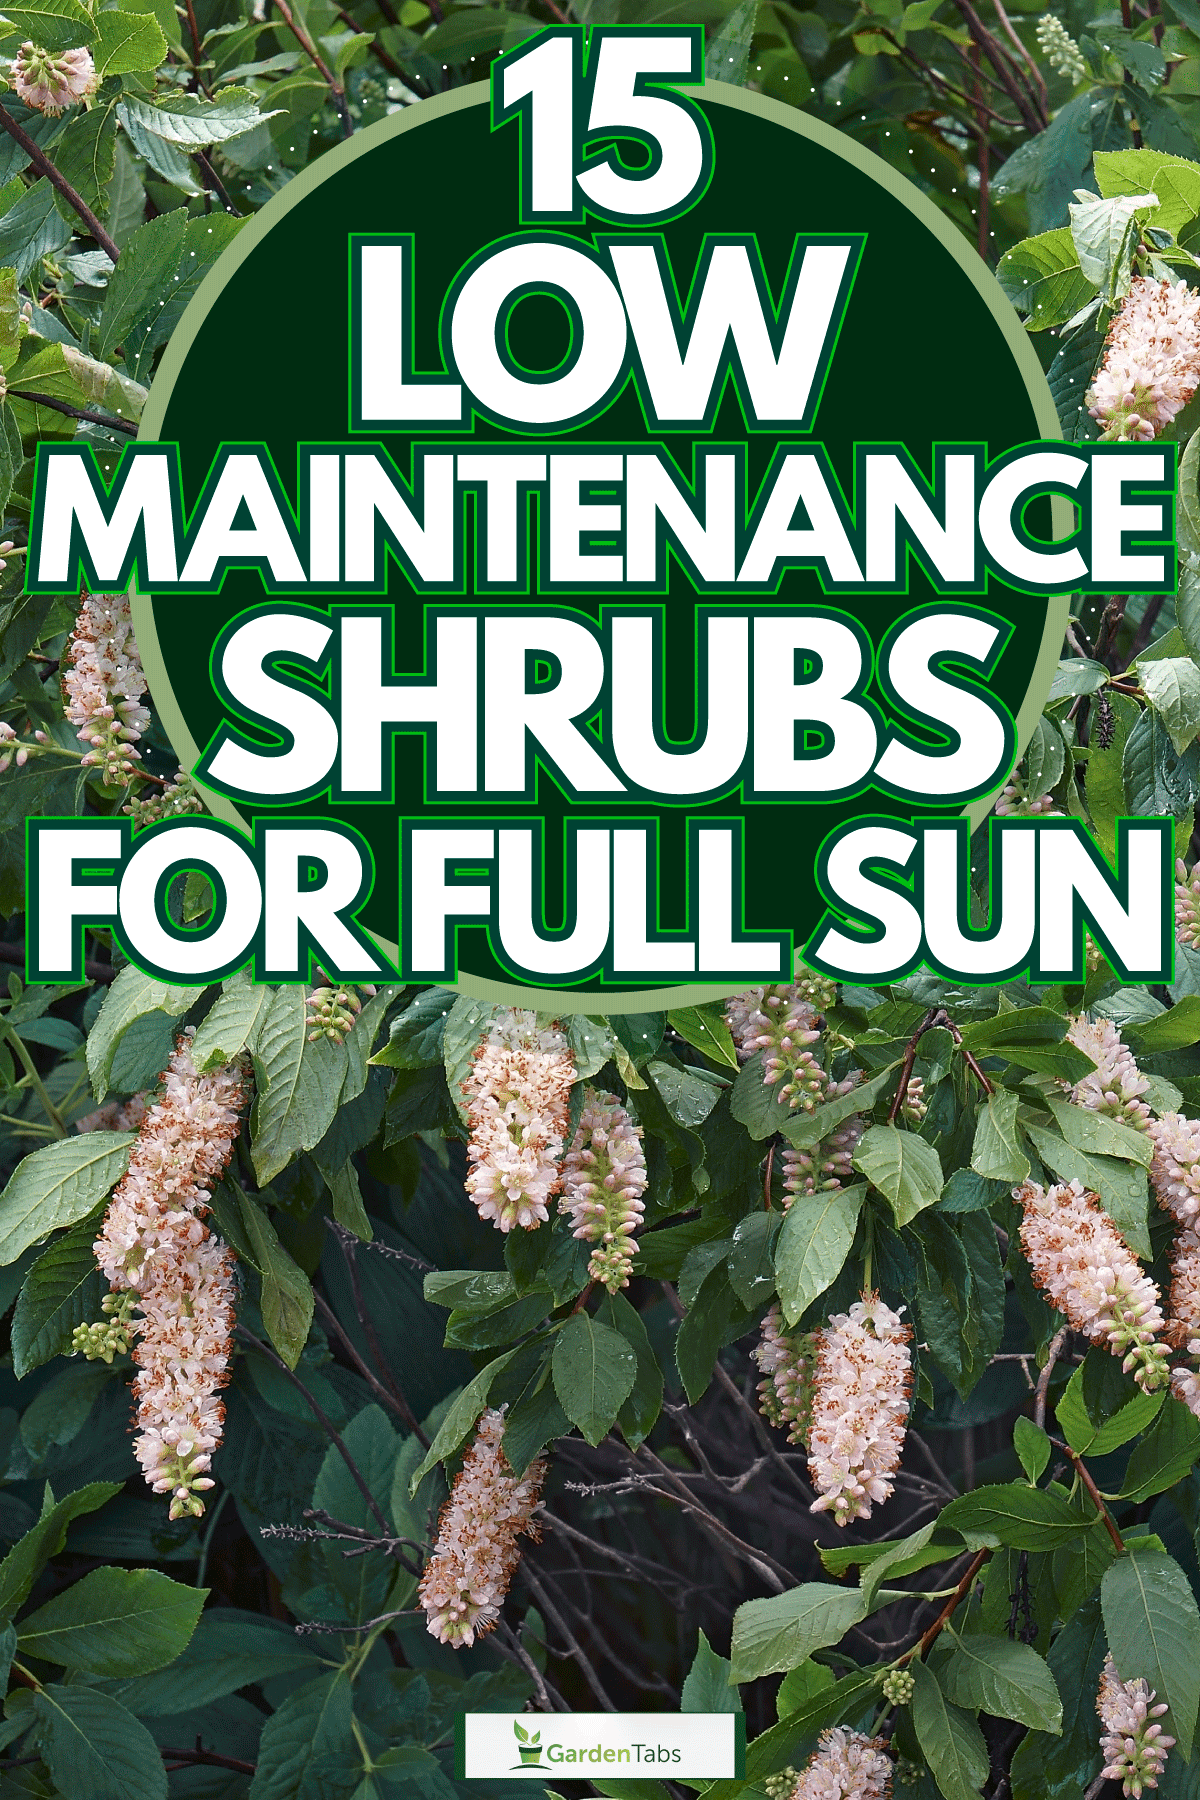 A big summersweet shrub at the garden, 15 Low Maintenance Shrubs For Full Sun